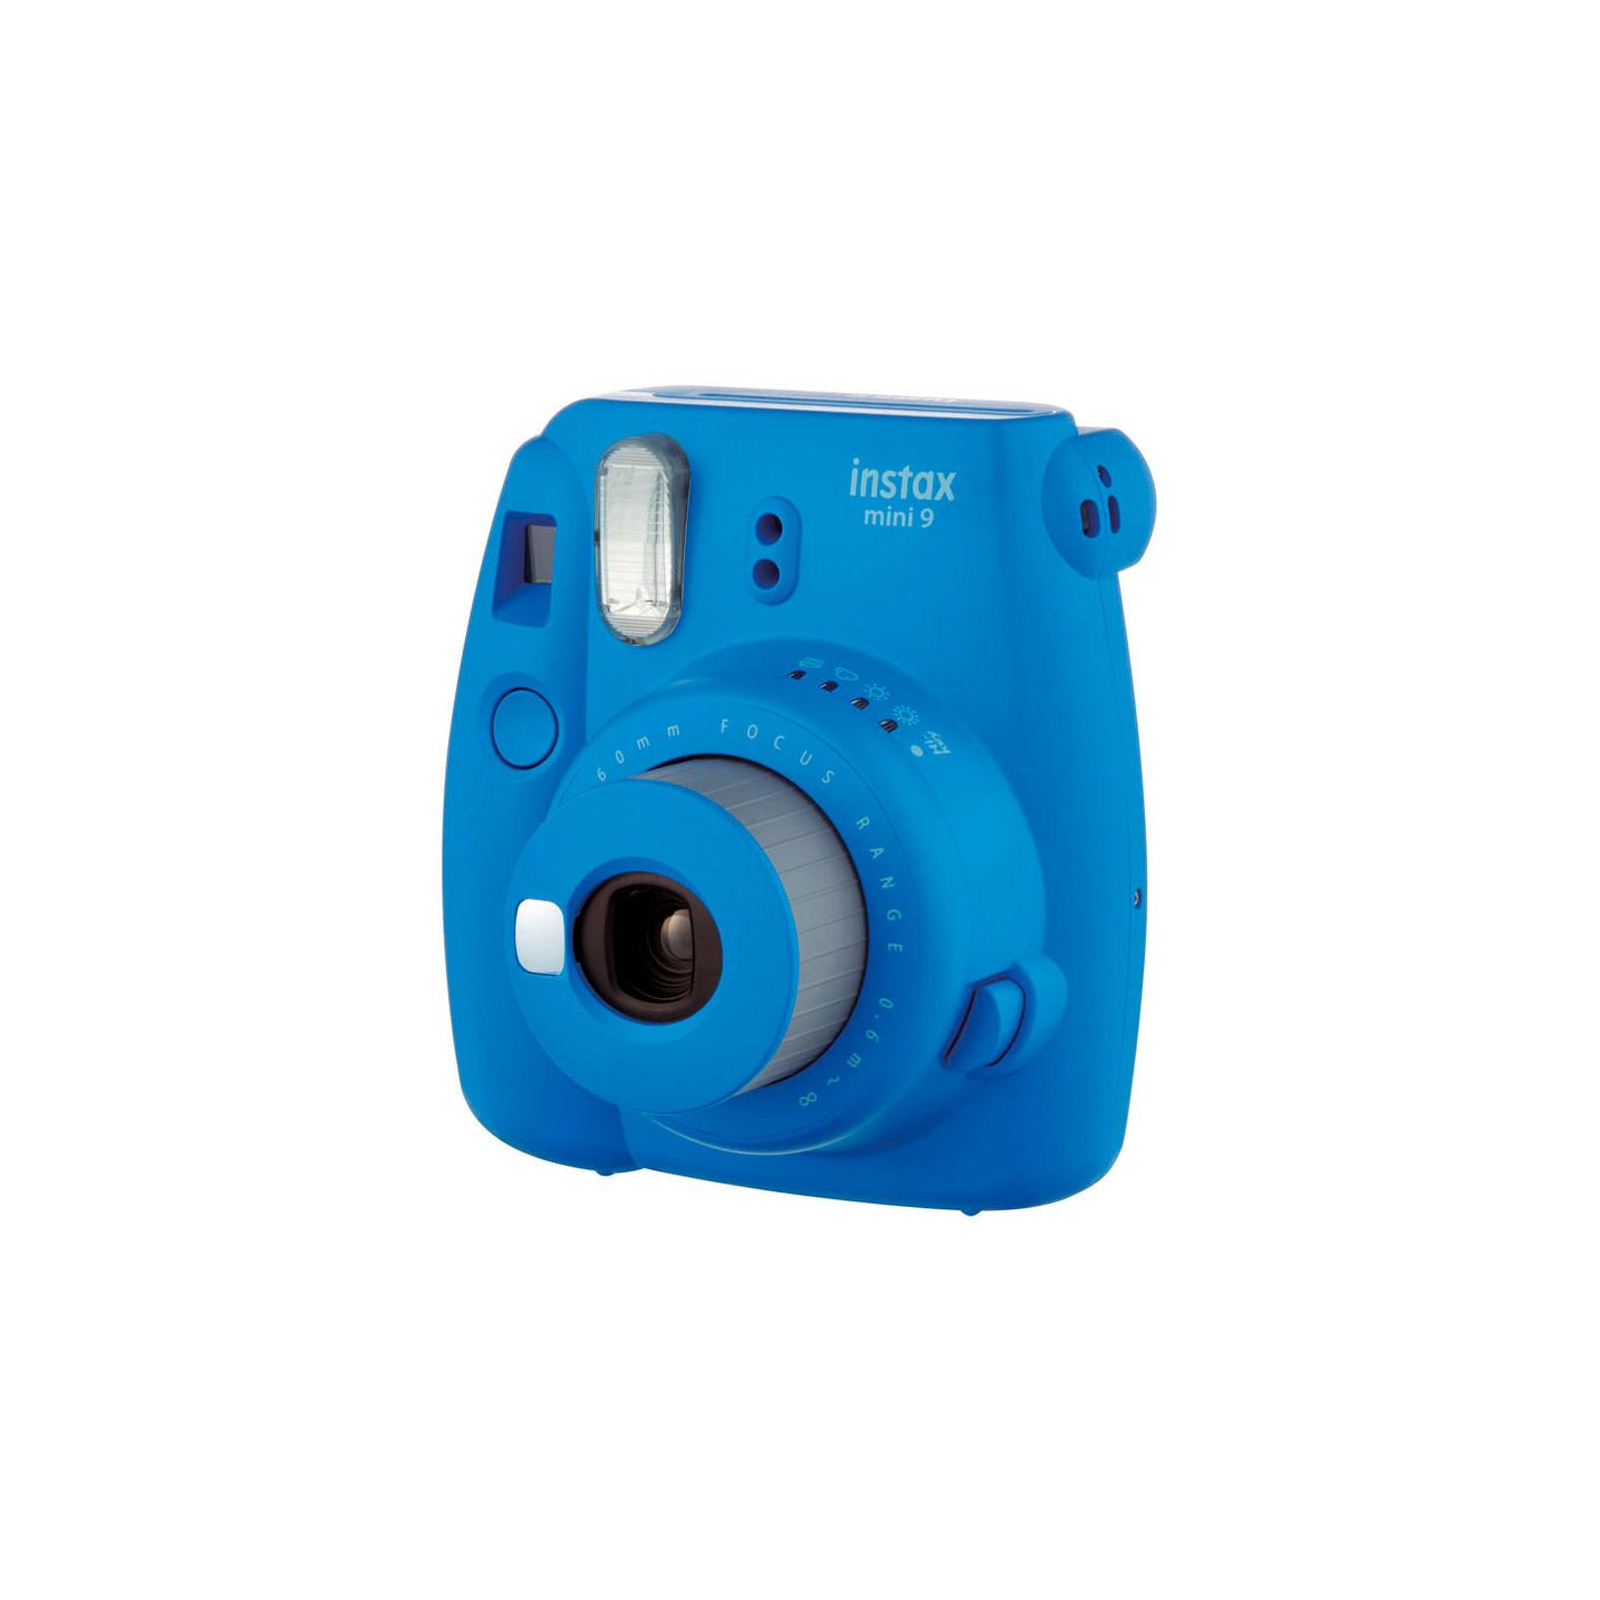 Камера моментальной печати Fujifilm Instax Mini 9 CAMERA FLA PINK EX D N (16550538)